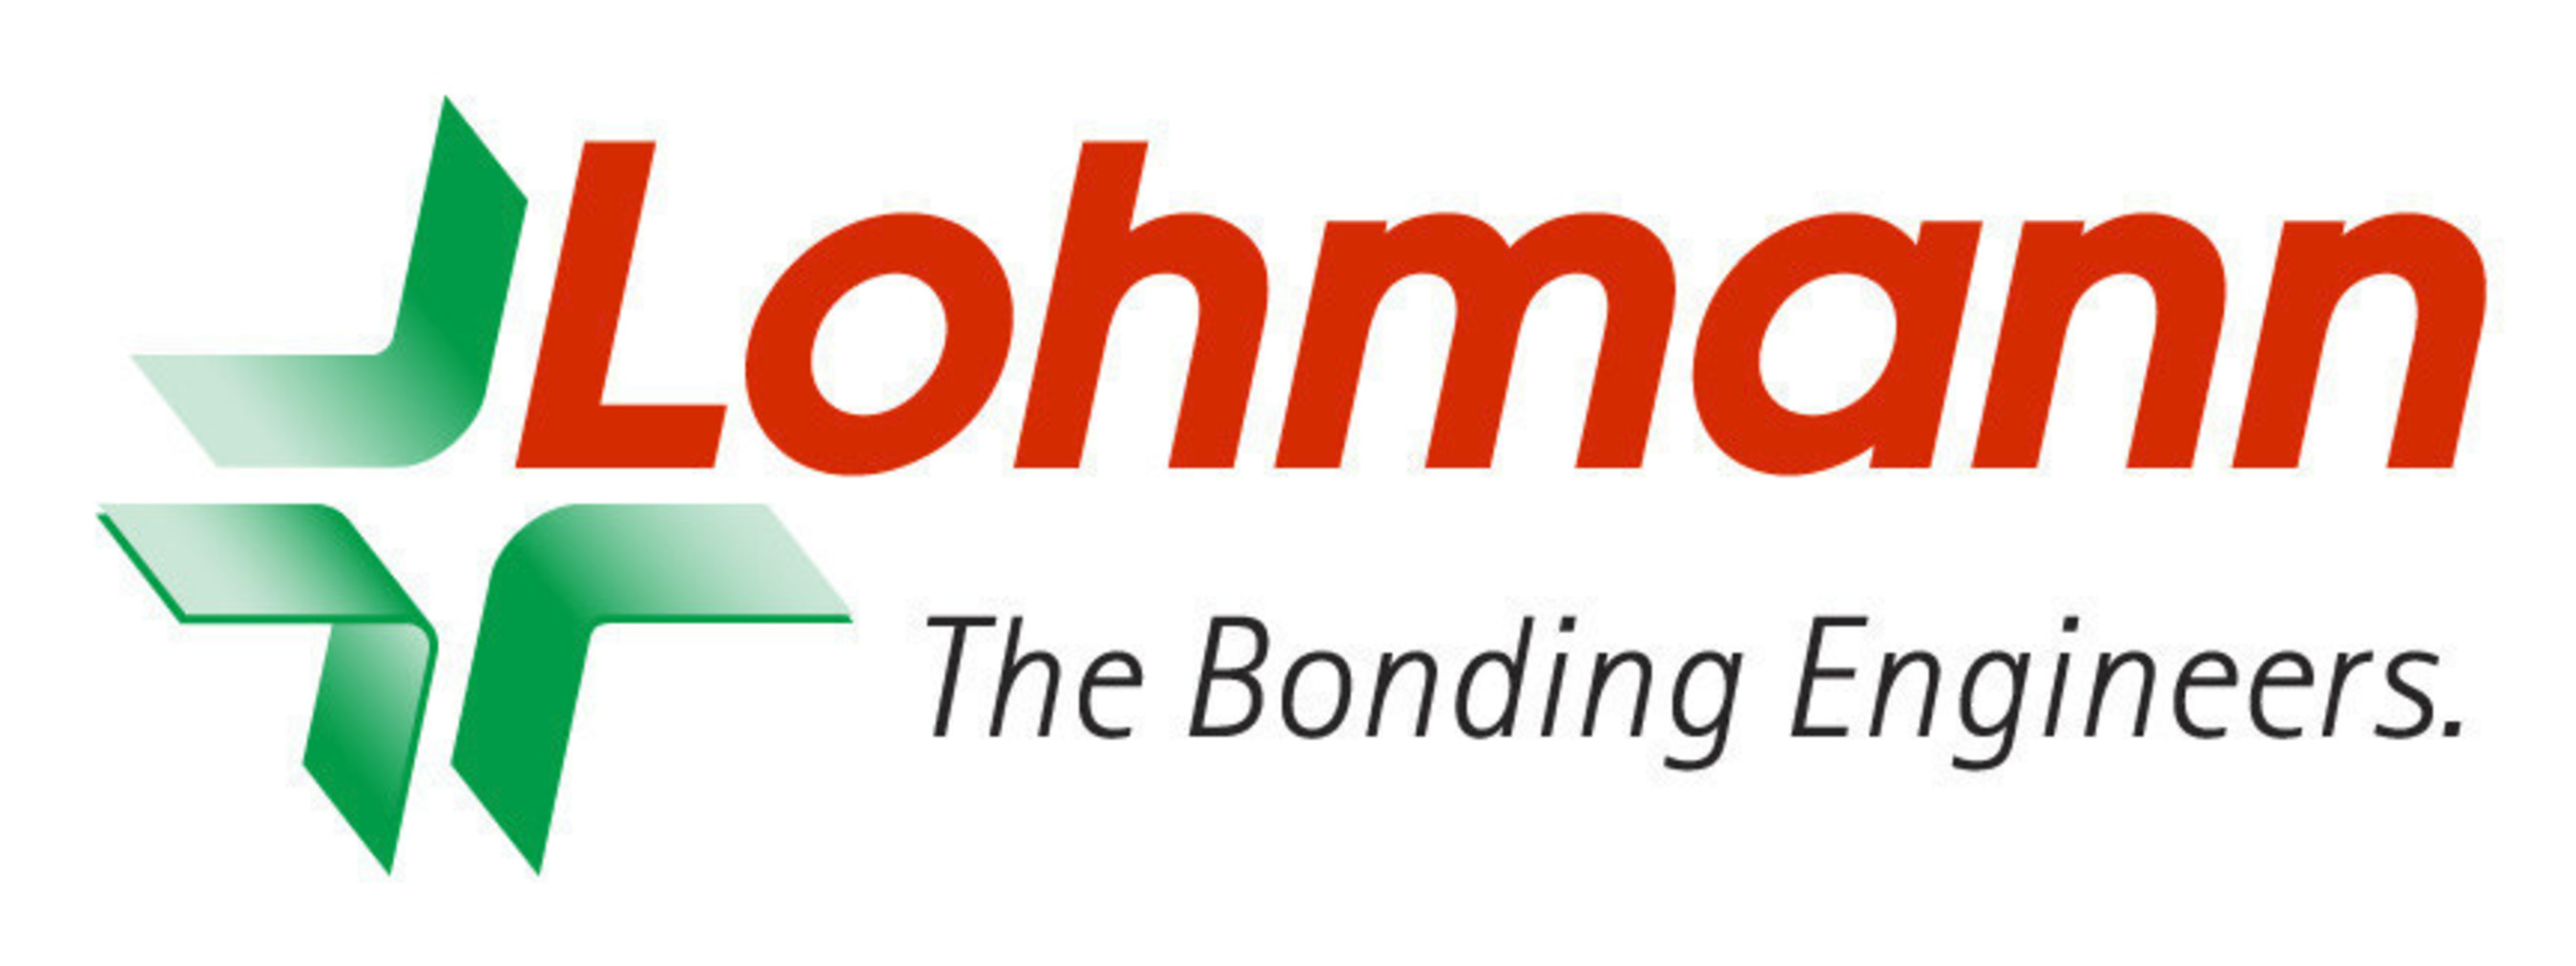 Lohmann, The Bonding Engineers logo (PRNewsFoto/Lohmann Corporation)